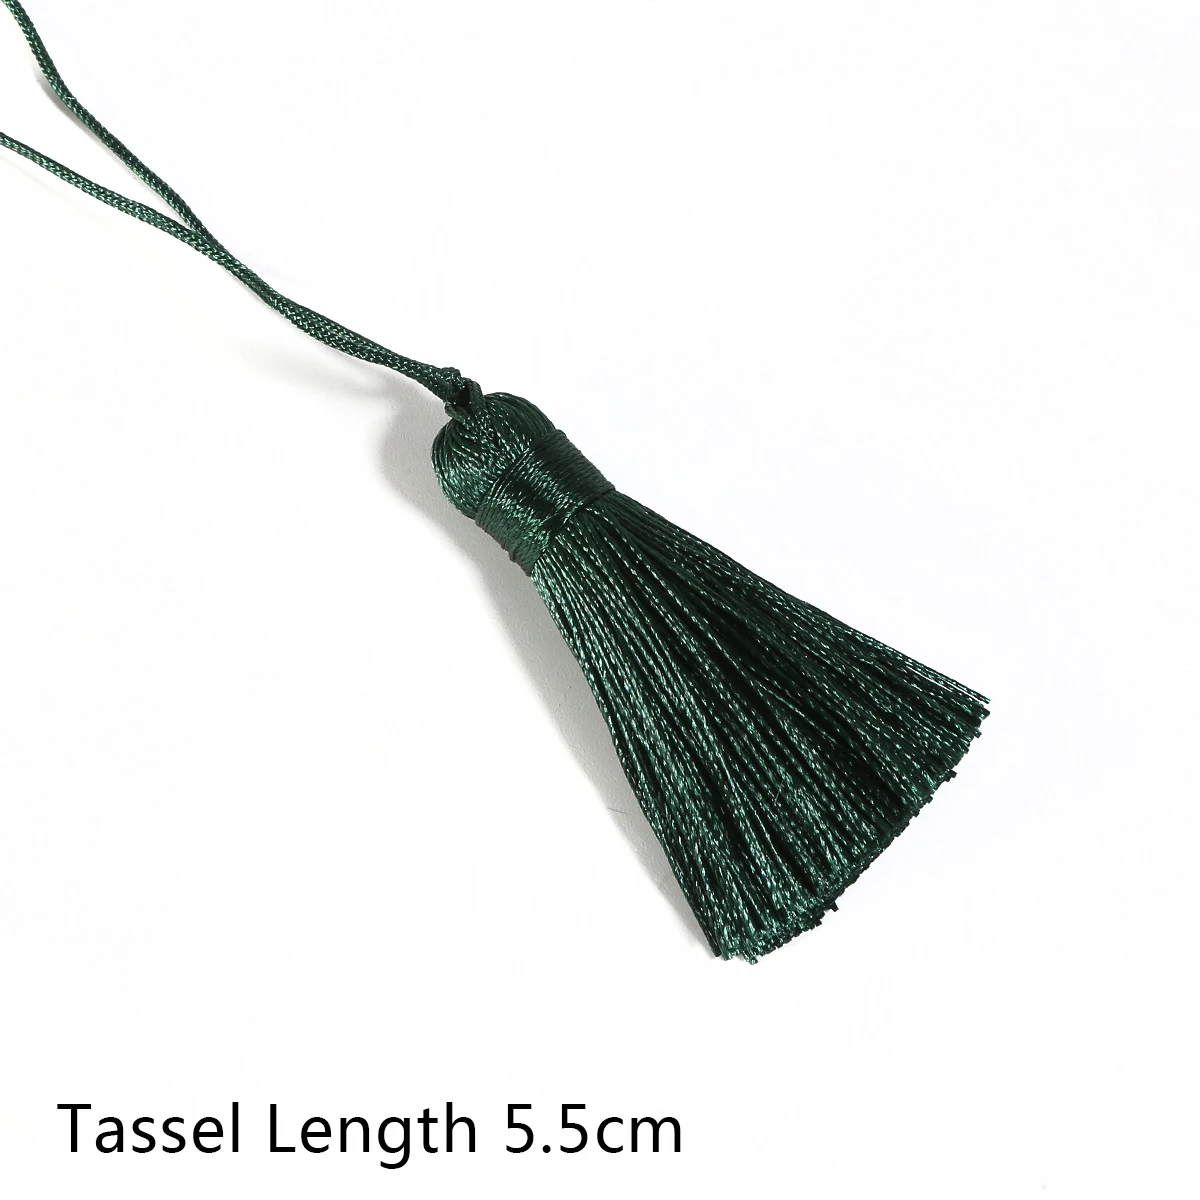 1pcs 5.5cm Colorful Cotton Silk Tassel Short Tassel For DIY Crafts Curtains Hanging Decoration Jewelry Making Accessories - Цвет: Dark Green